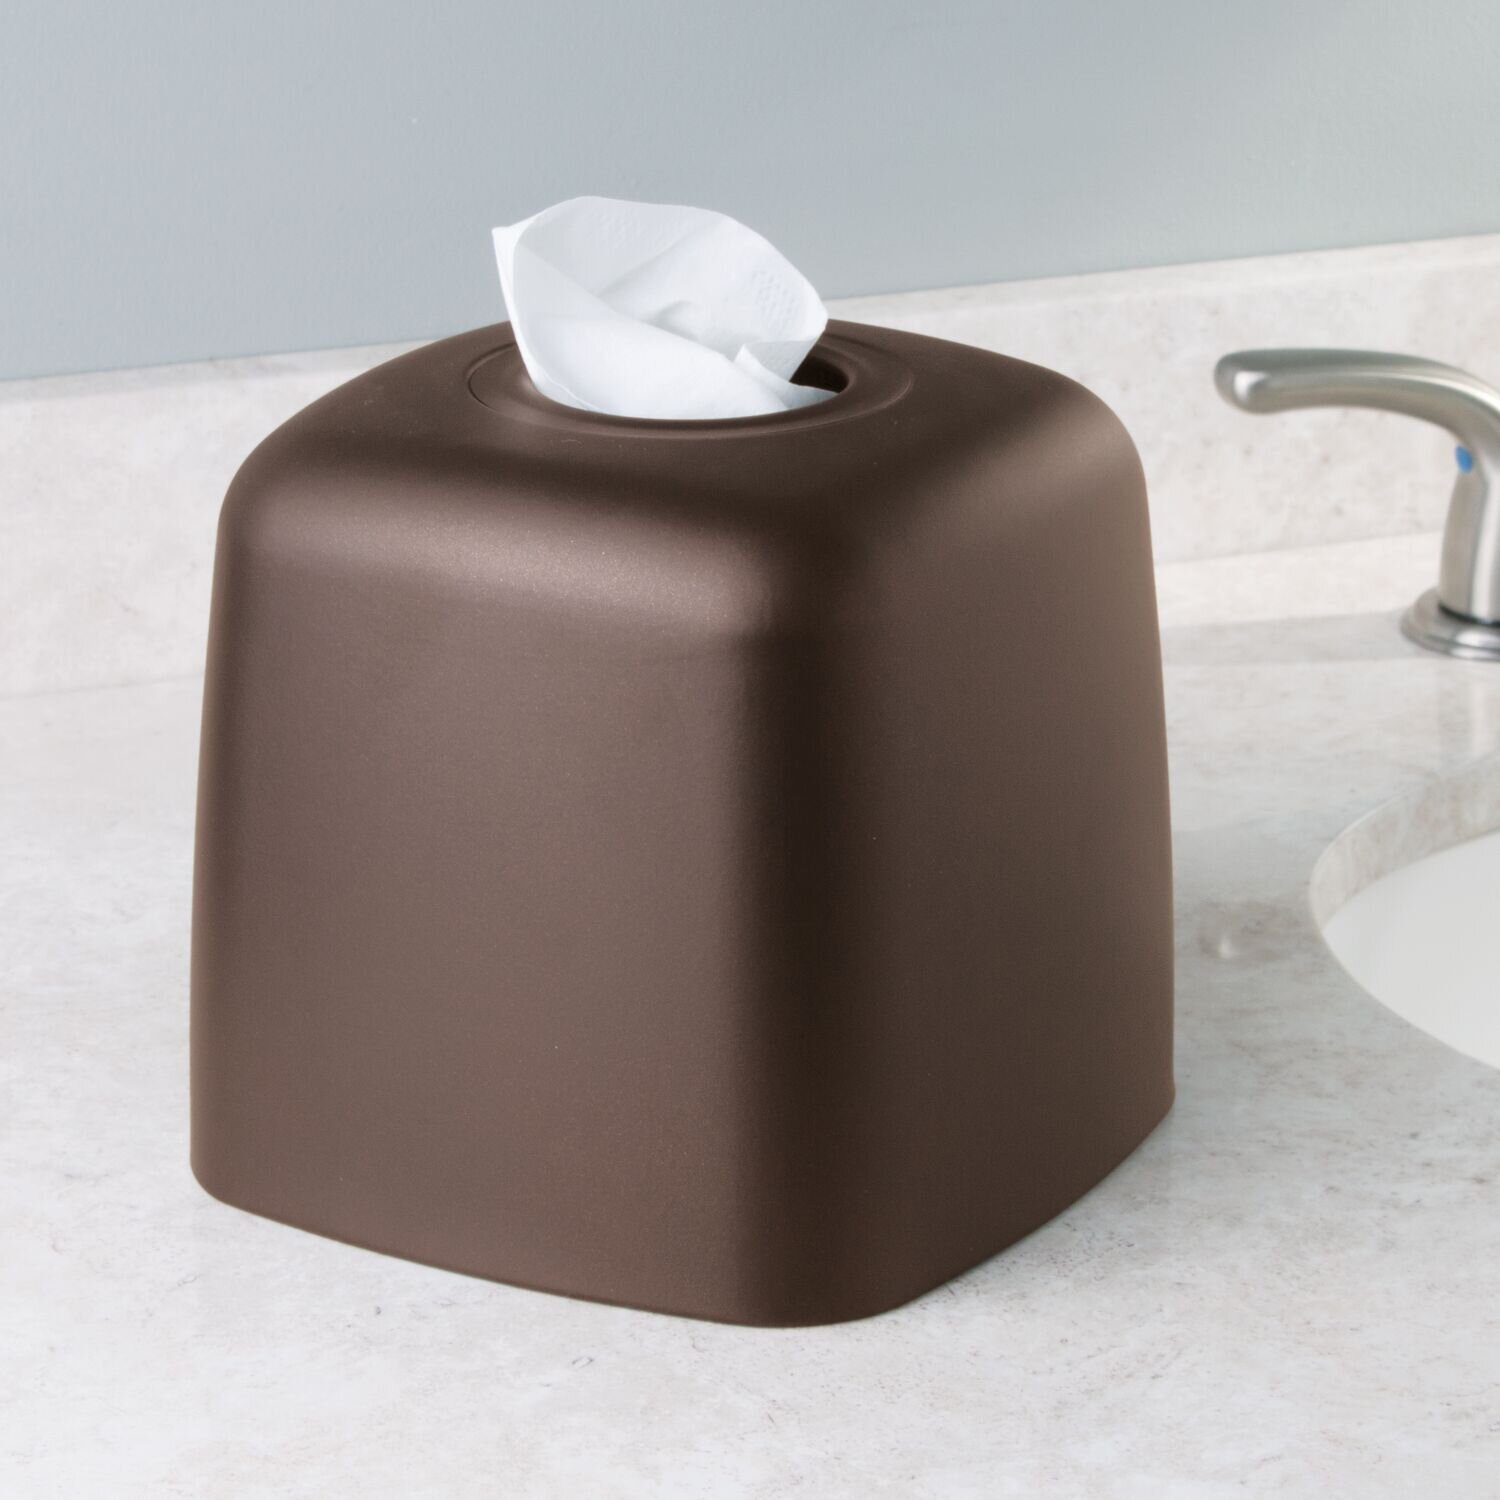 Bronze InterDesign Olivia Facial Tissue Box Cover/Holder for Bathroom Vanity Countertops